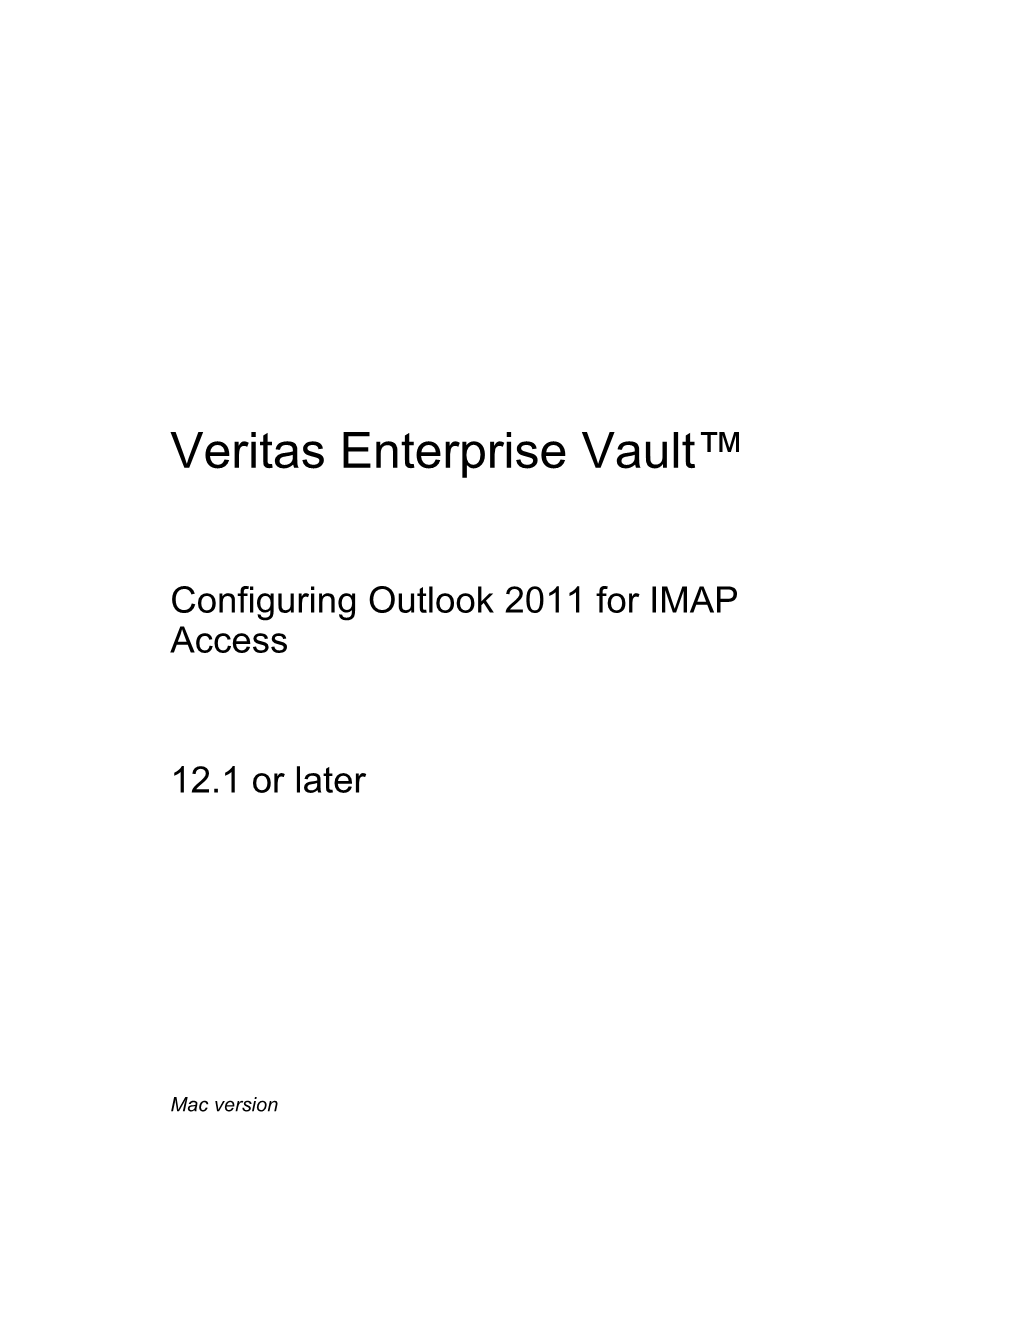 Veritas Enterprise Vault : Configuring Outlook 2011 for IMAP Access